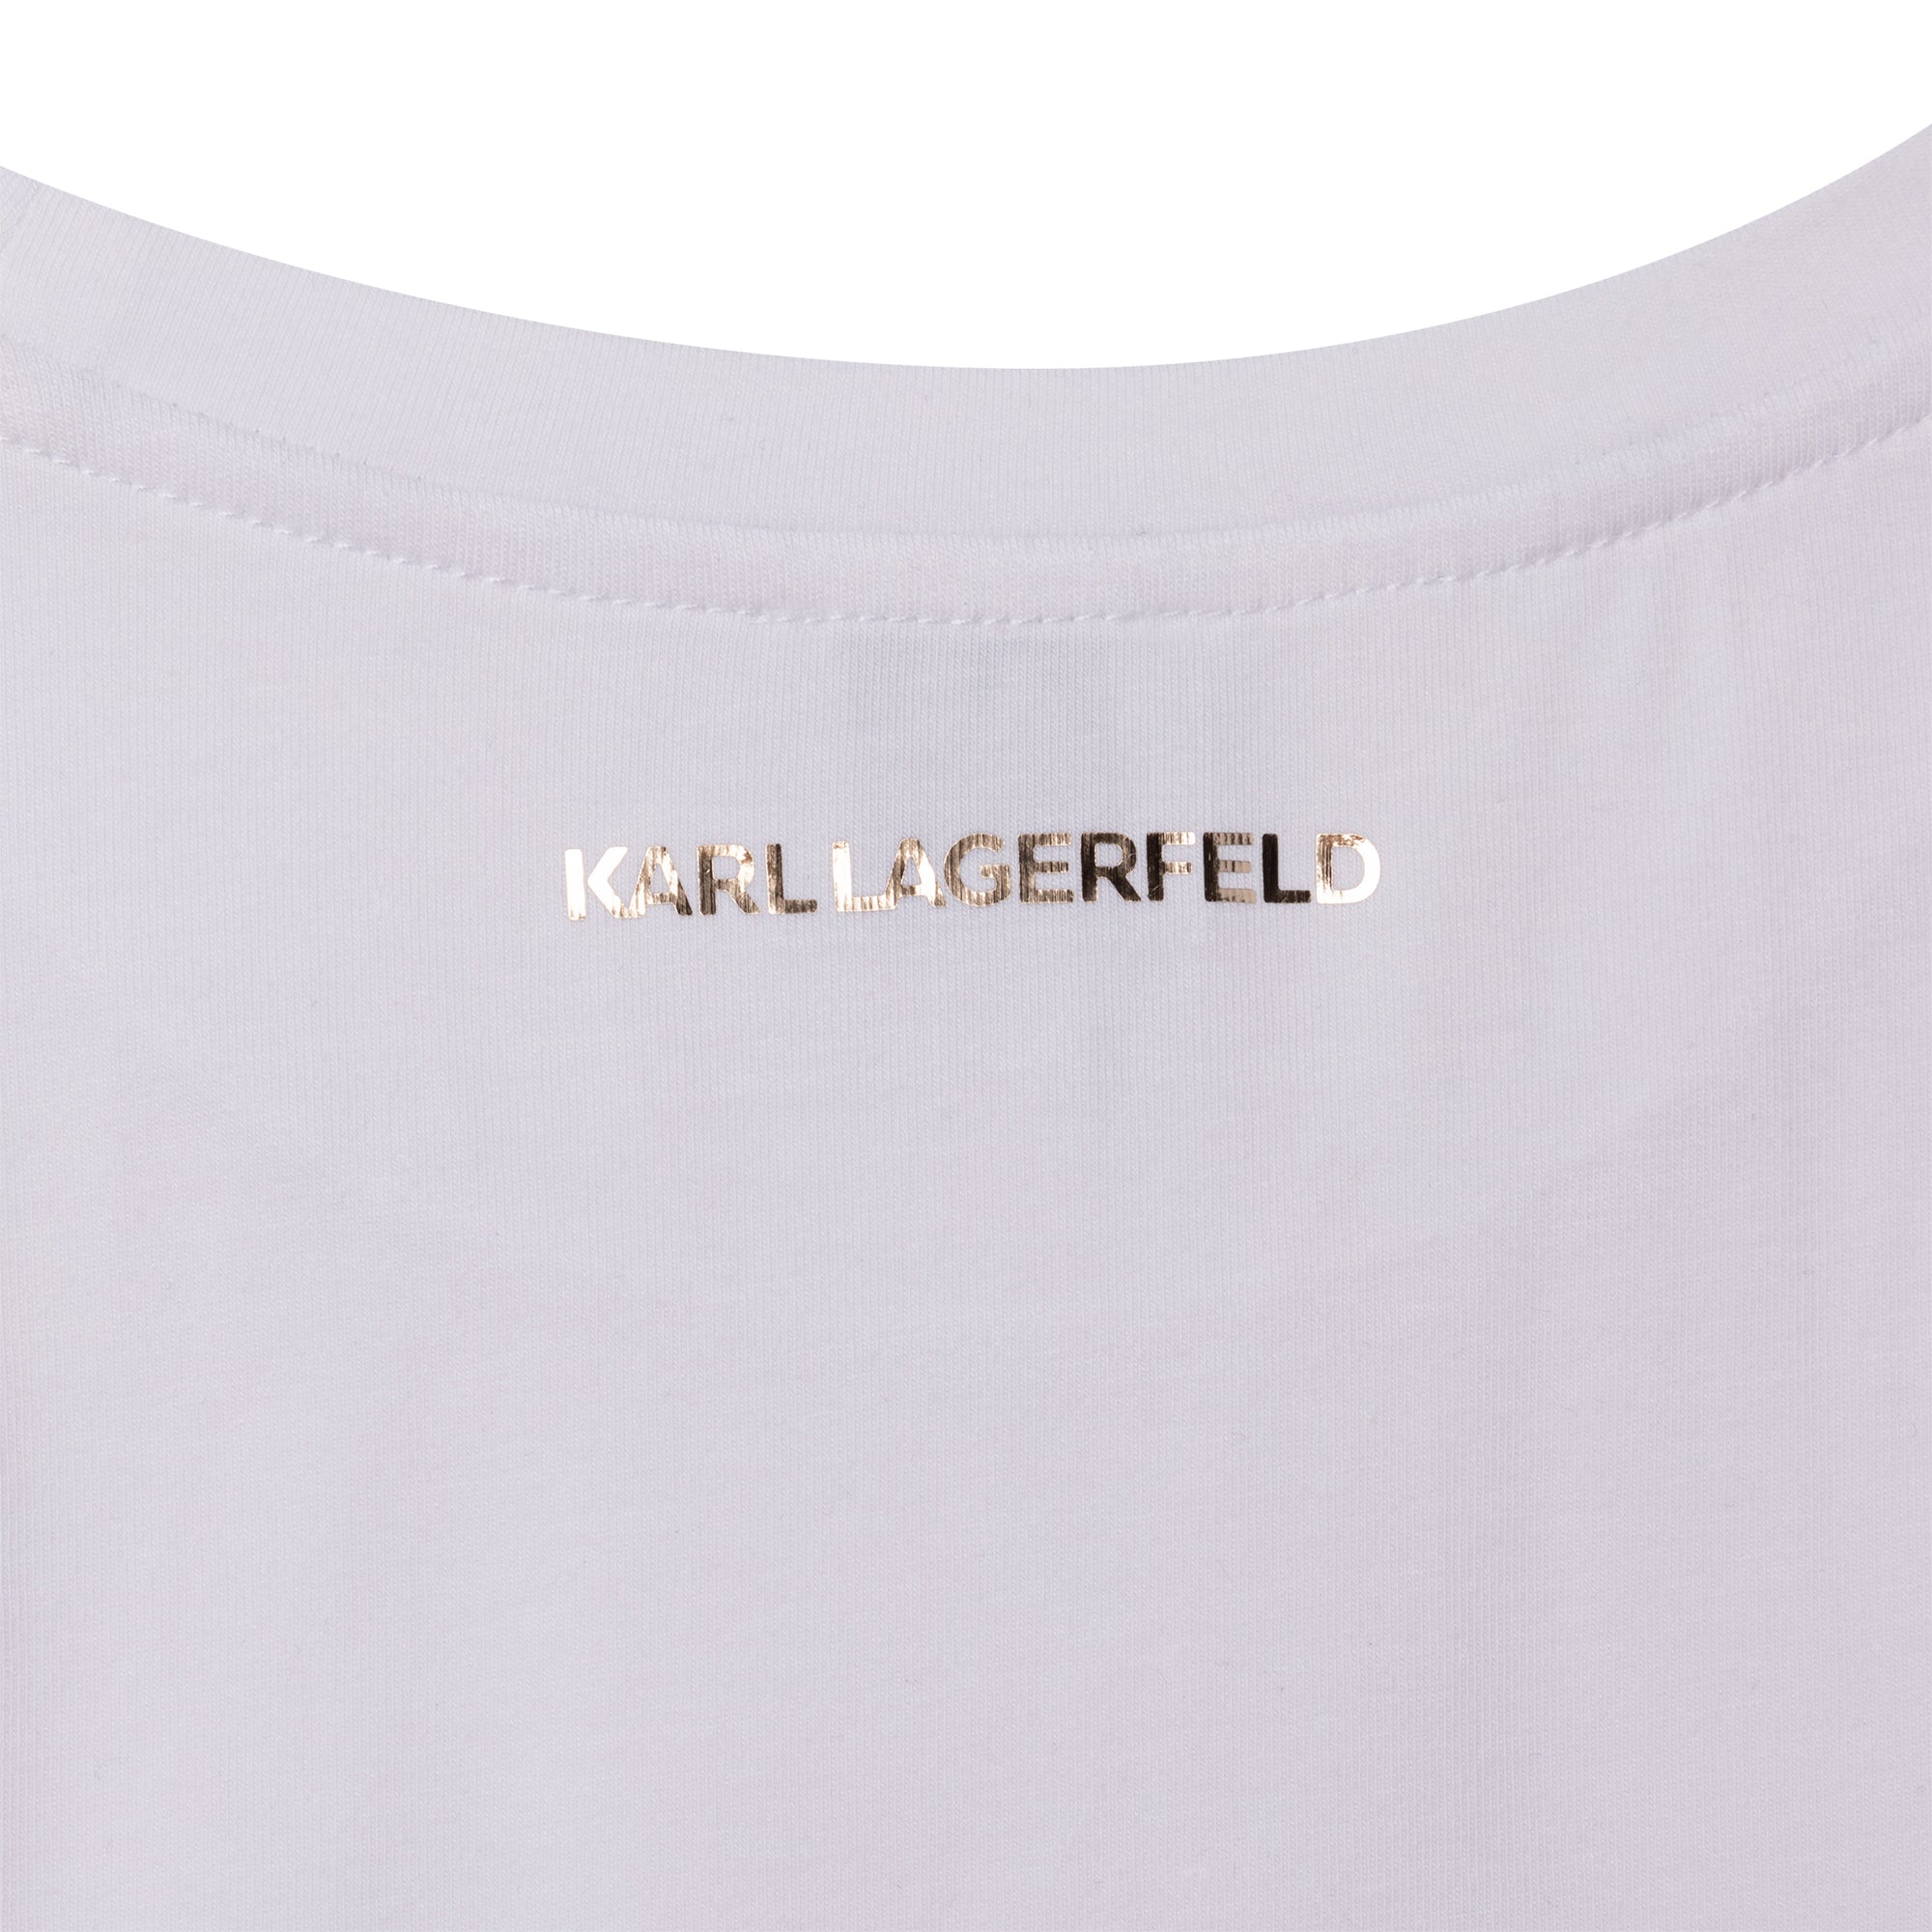 Karl Short Sleeves Tee-Shirt Style: Z15359